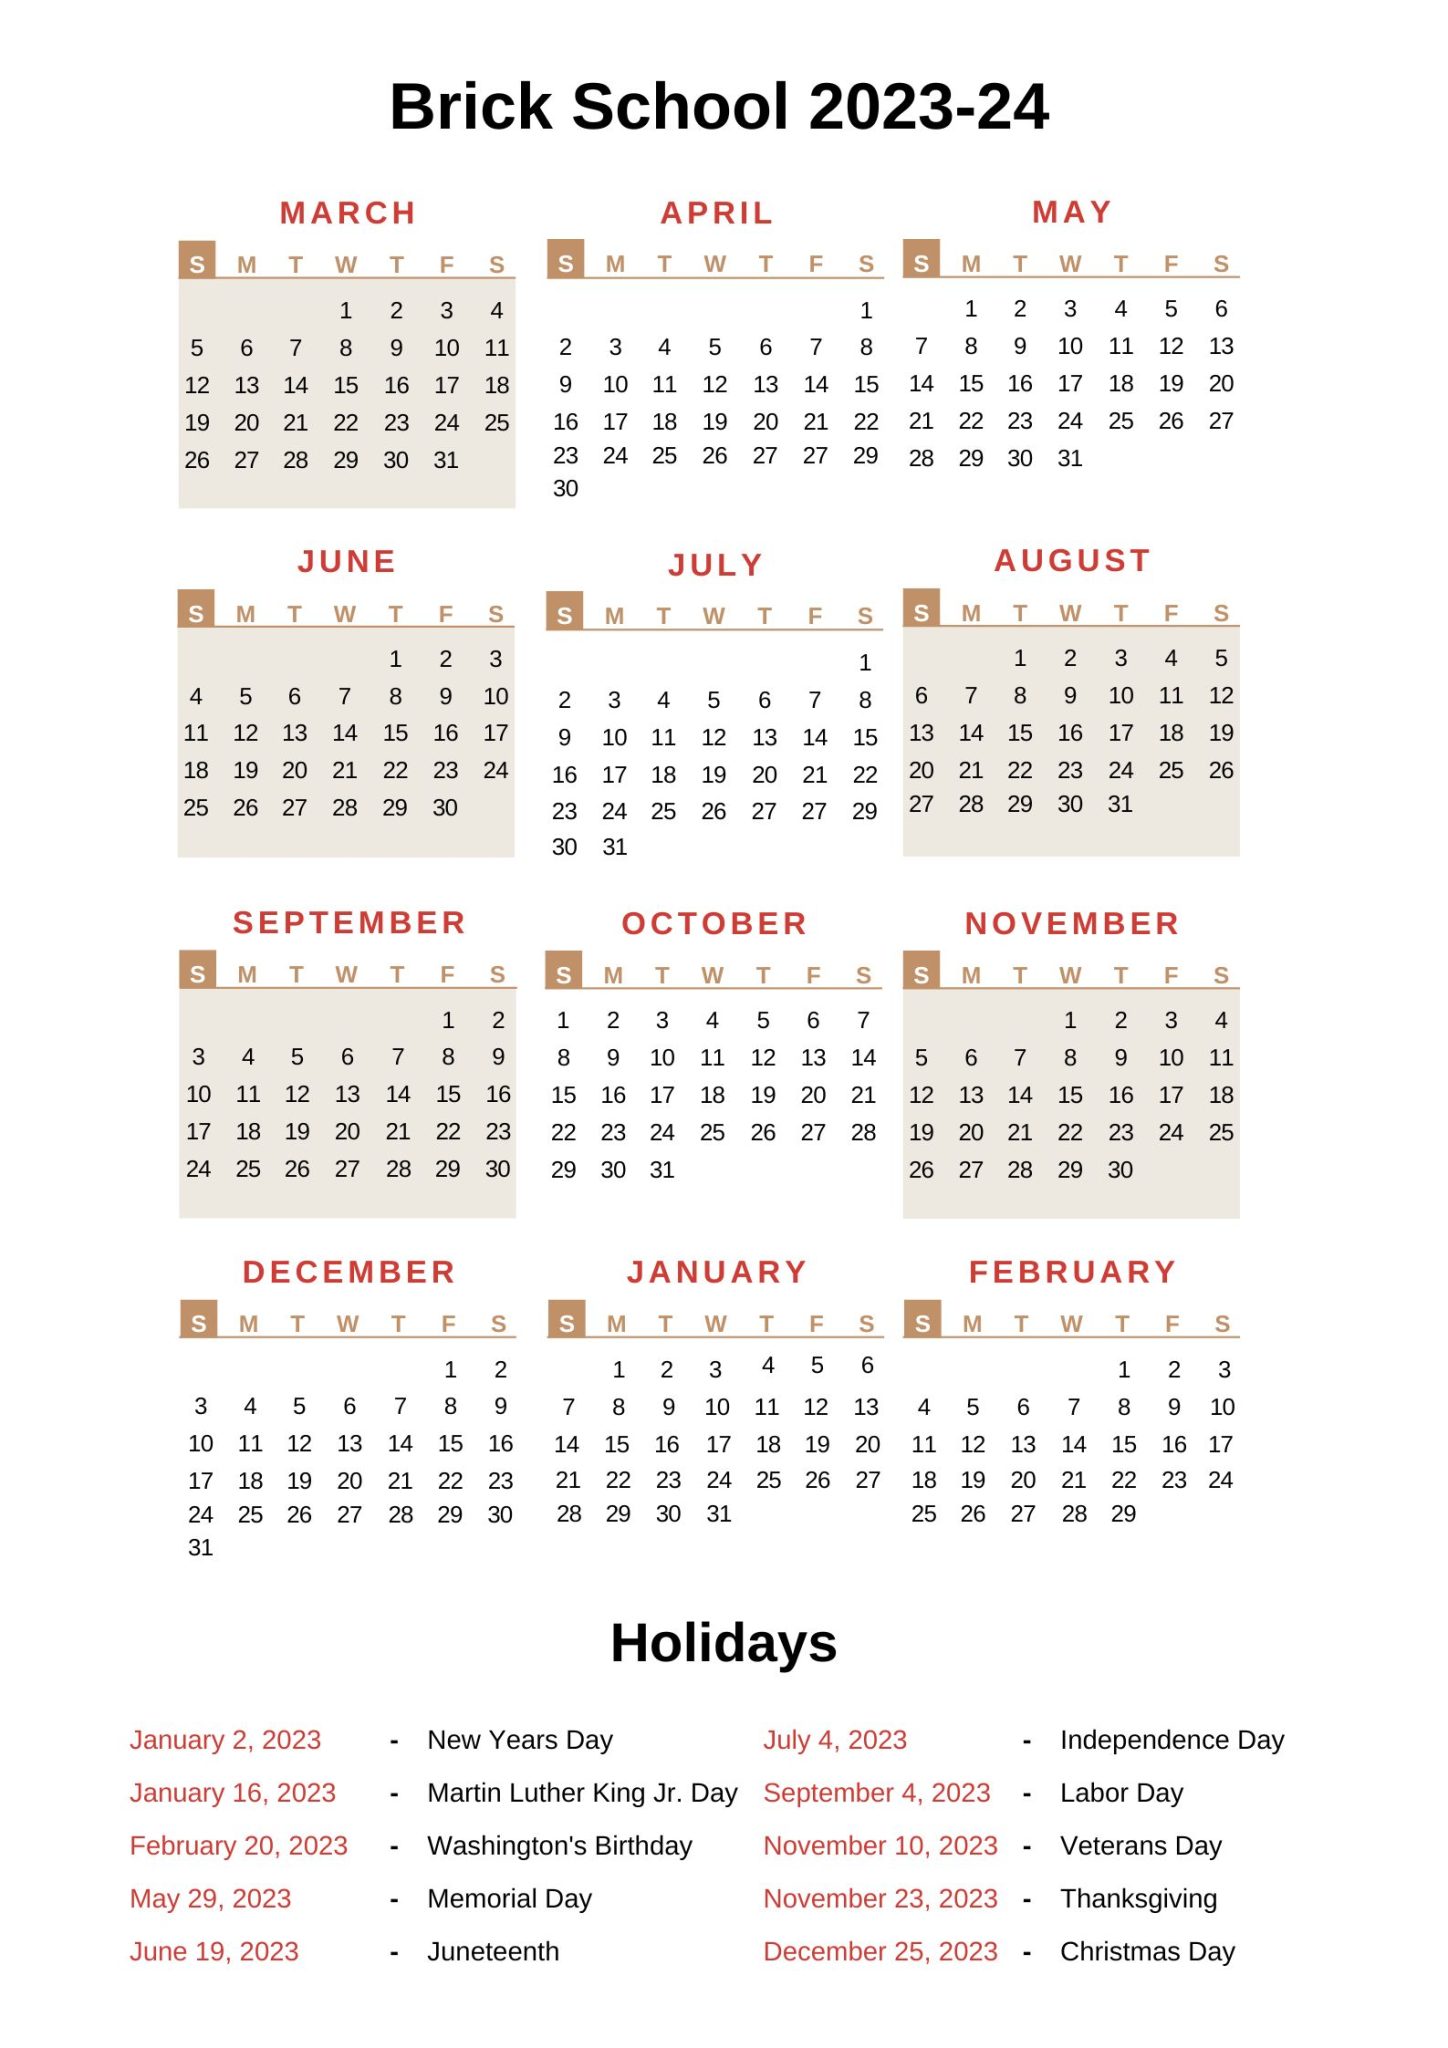 Brick Schools Calendar 202324 [BPS] with Holidays